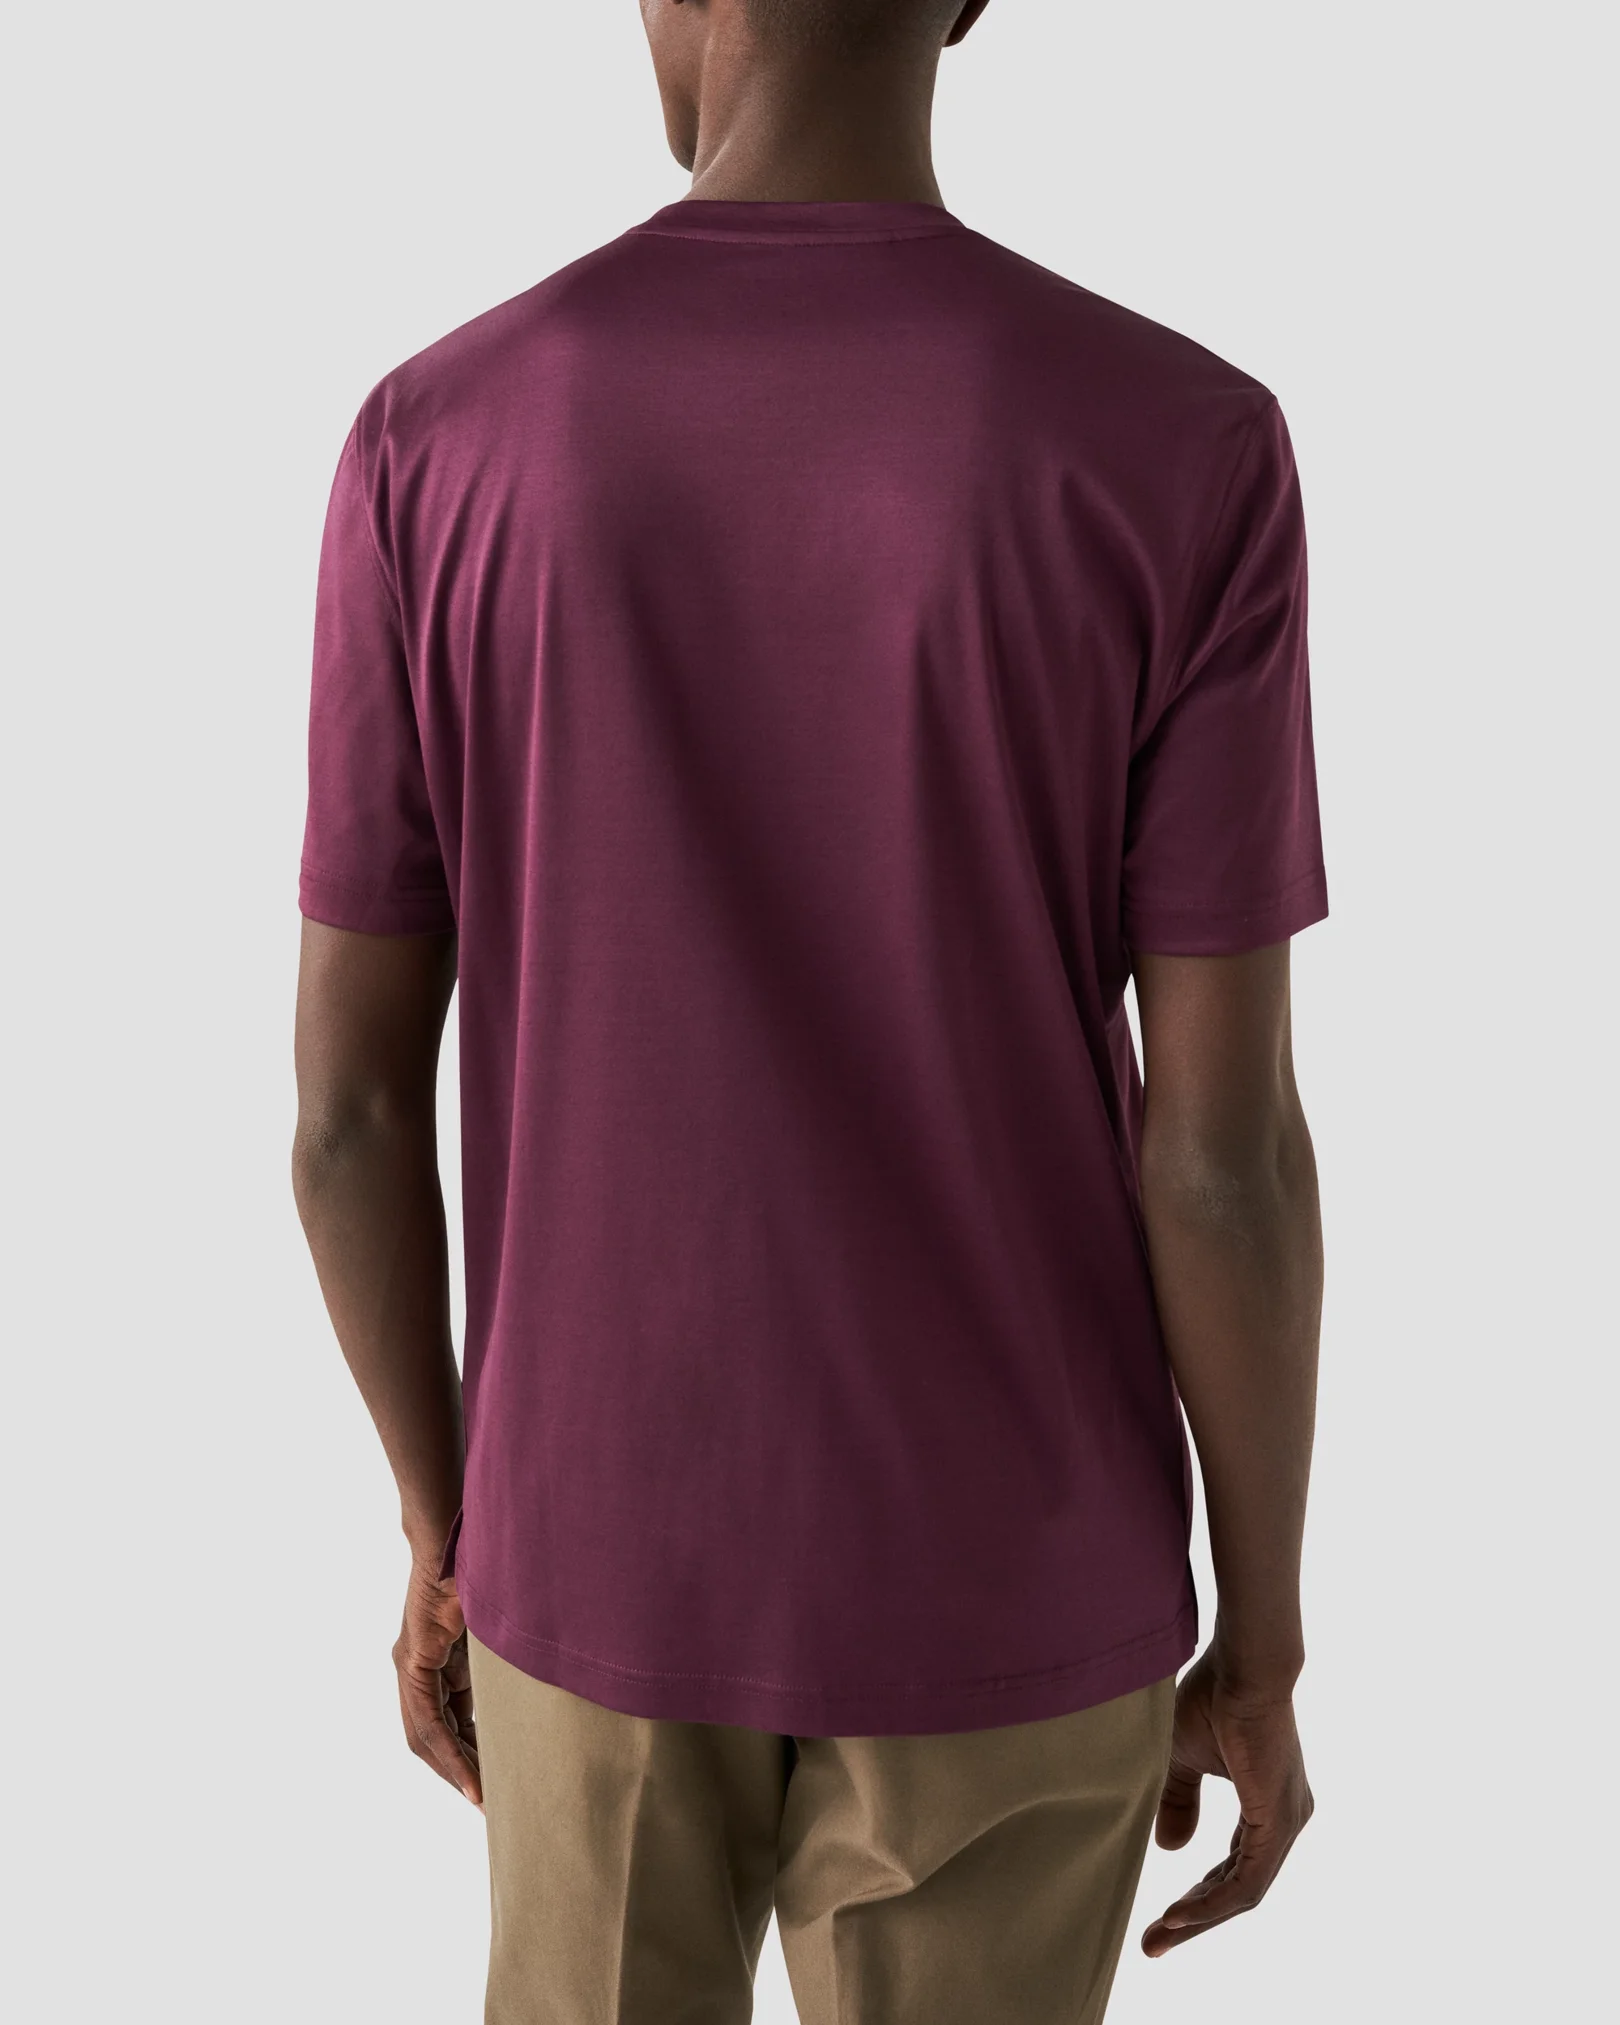 Eton - red jersey t shirt short sleeve boxfit t shirt